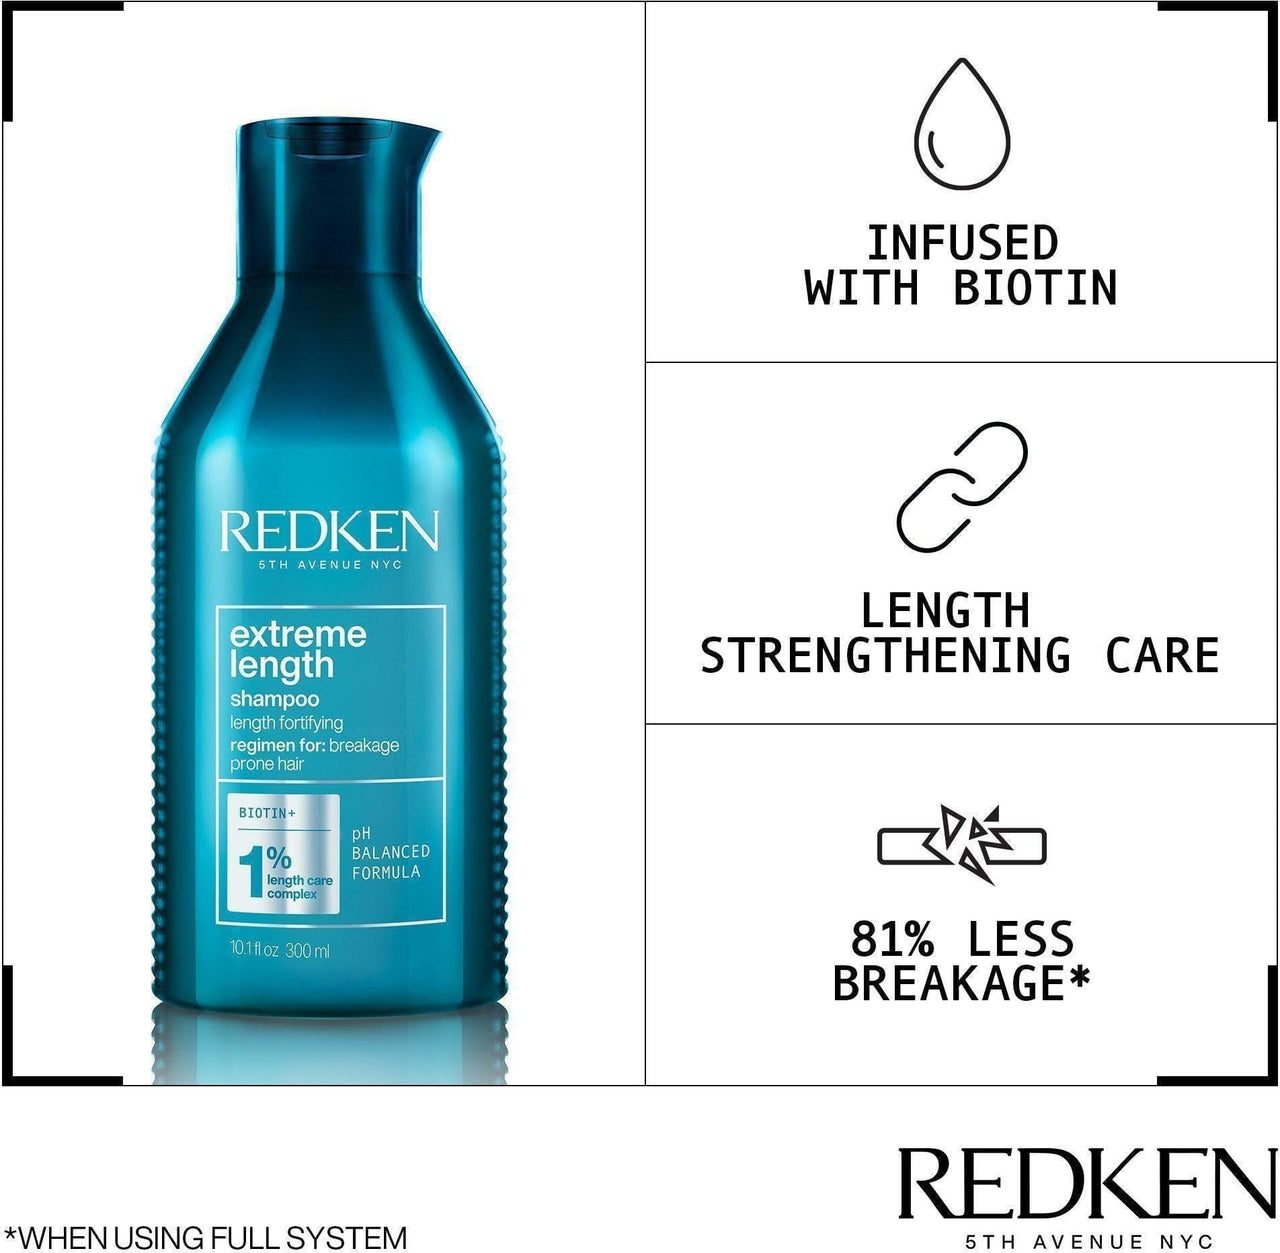 REDKEN_Extreme Lengths Shampoo 300ml / 10.1oz_Cosmetic World